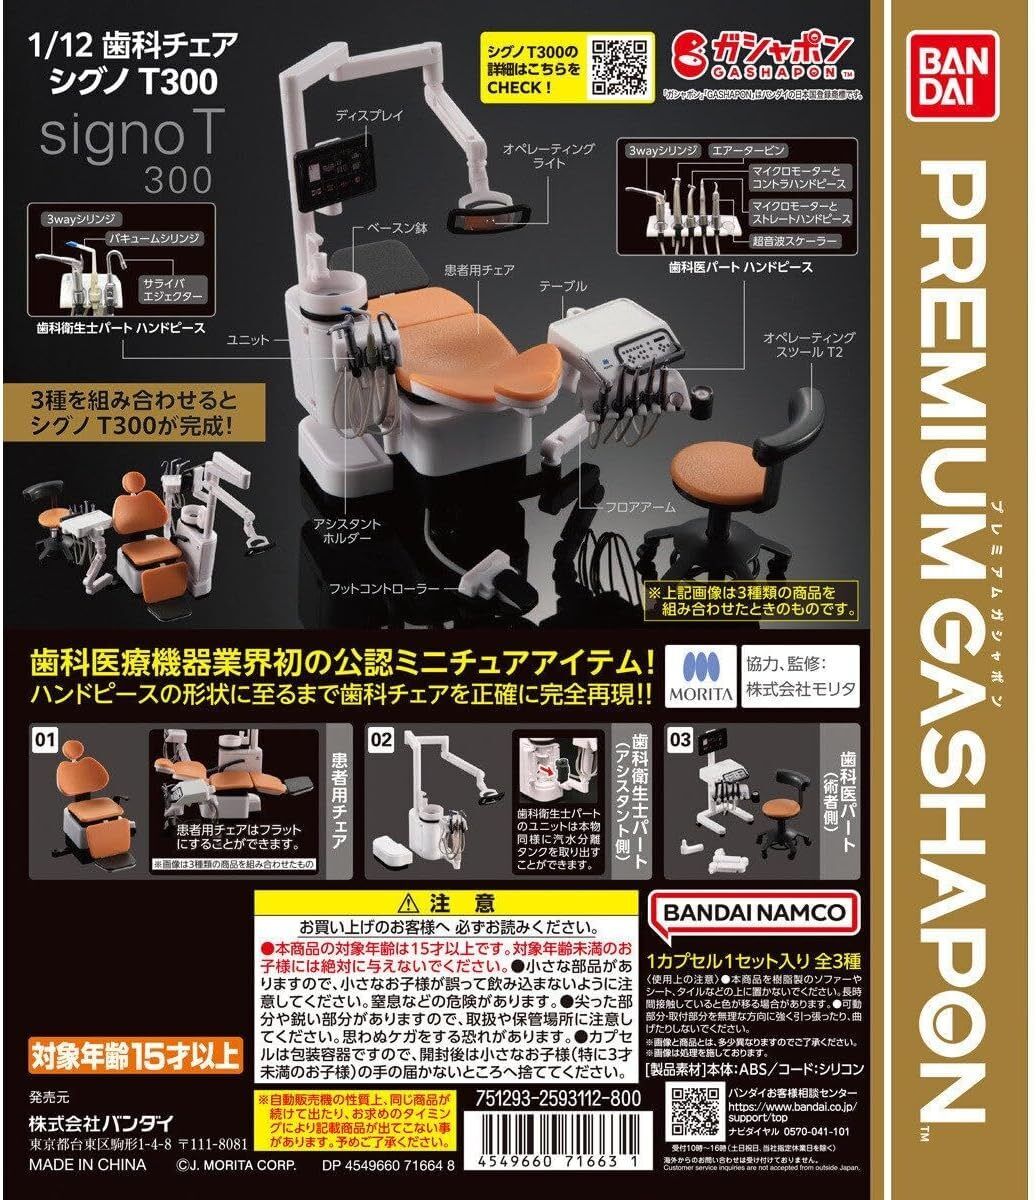 1/12 Dental Chair Signo T300 3 Types Set Full Comp Gacha Gacha Capsule Toy Japan